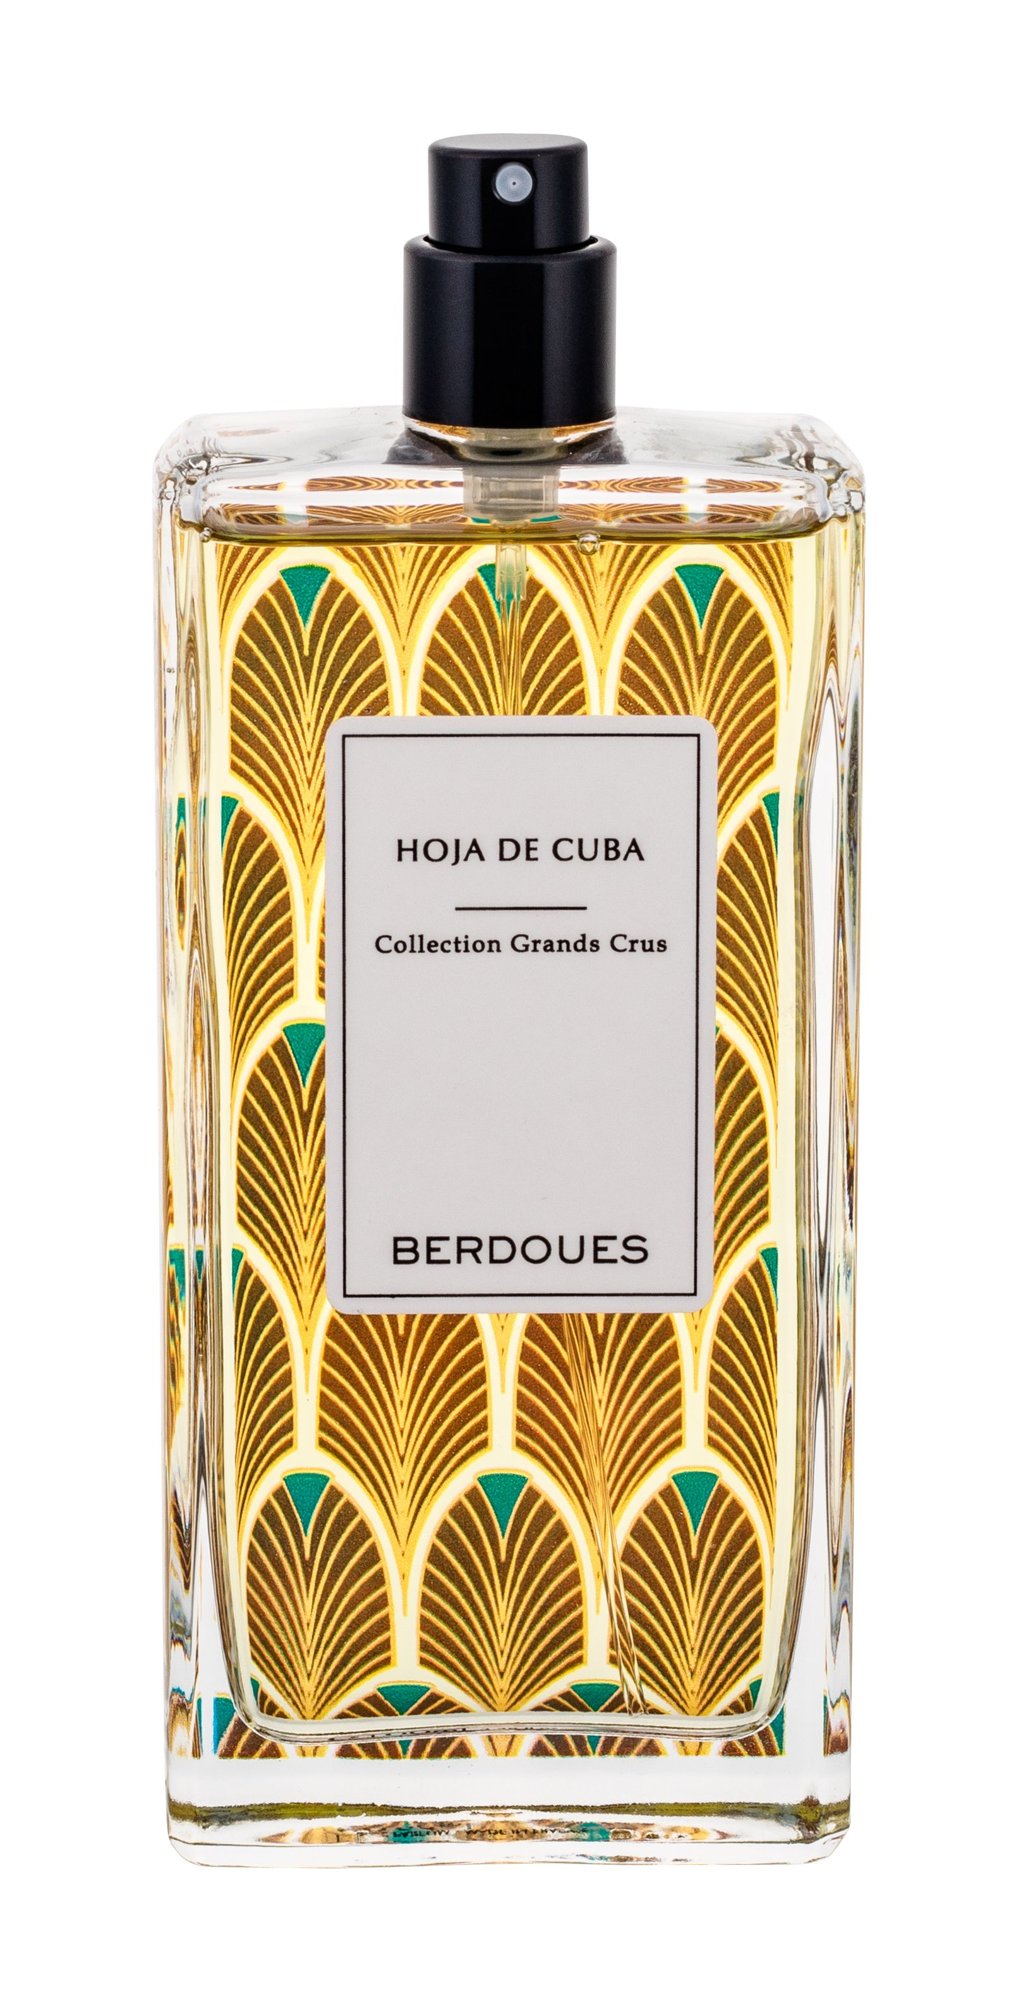 Berdoues Collection Grands Crus Hoja de Cuba